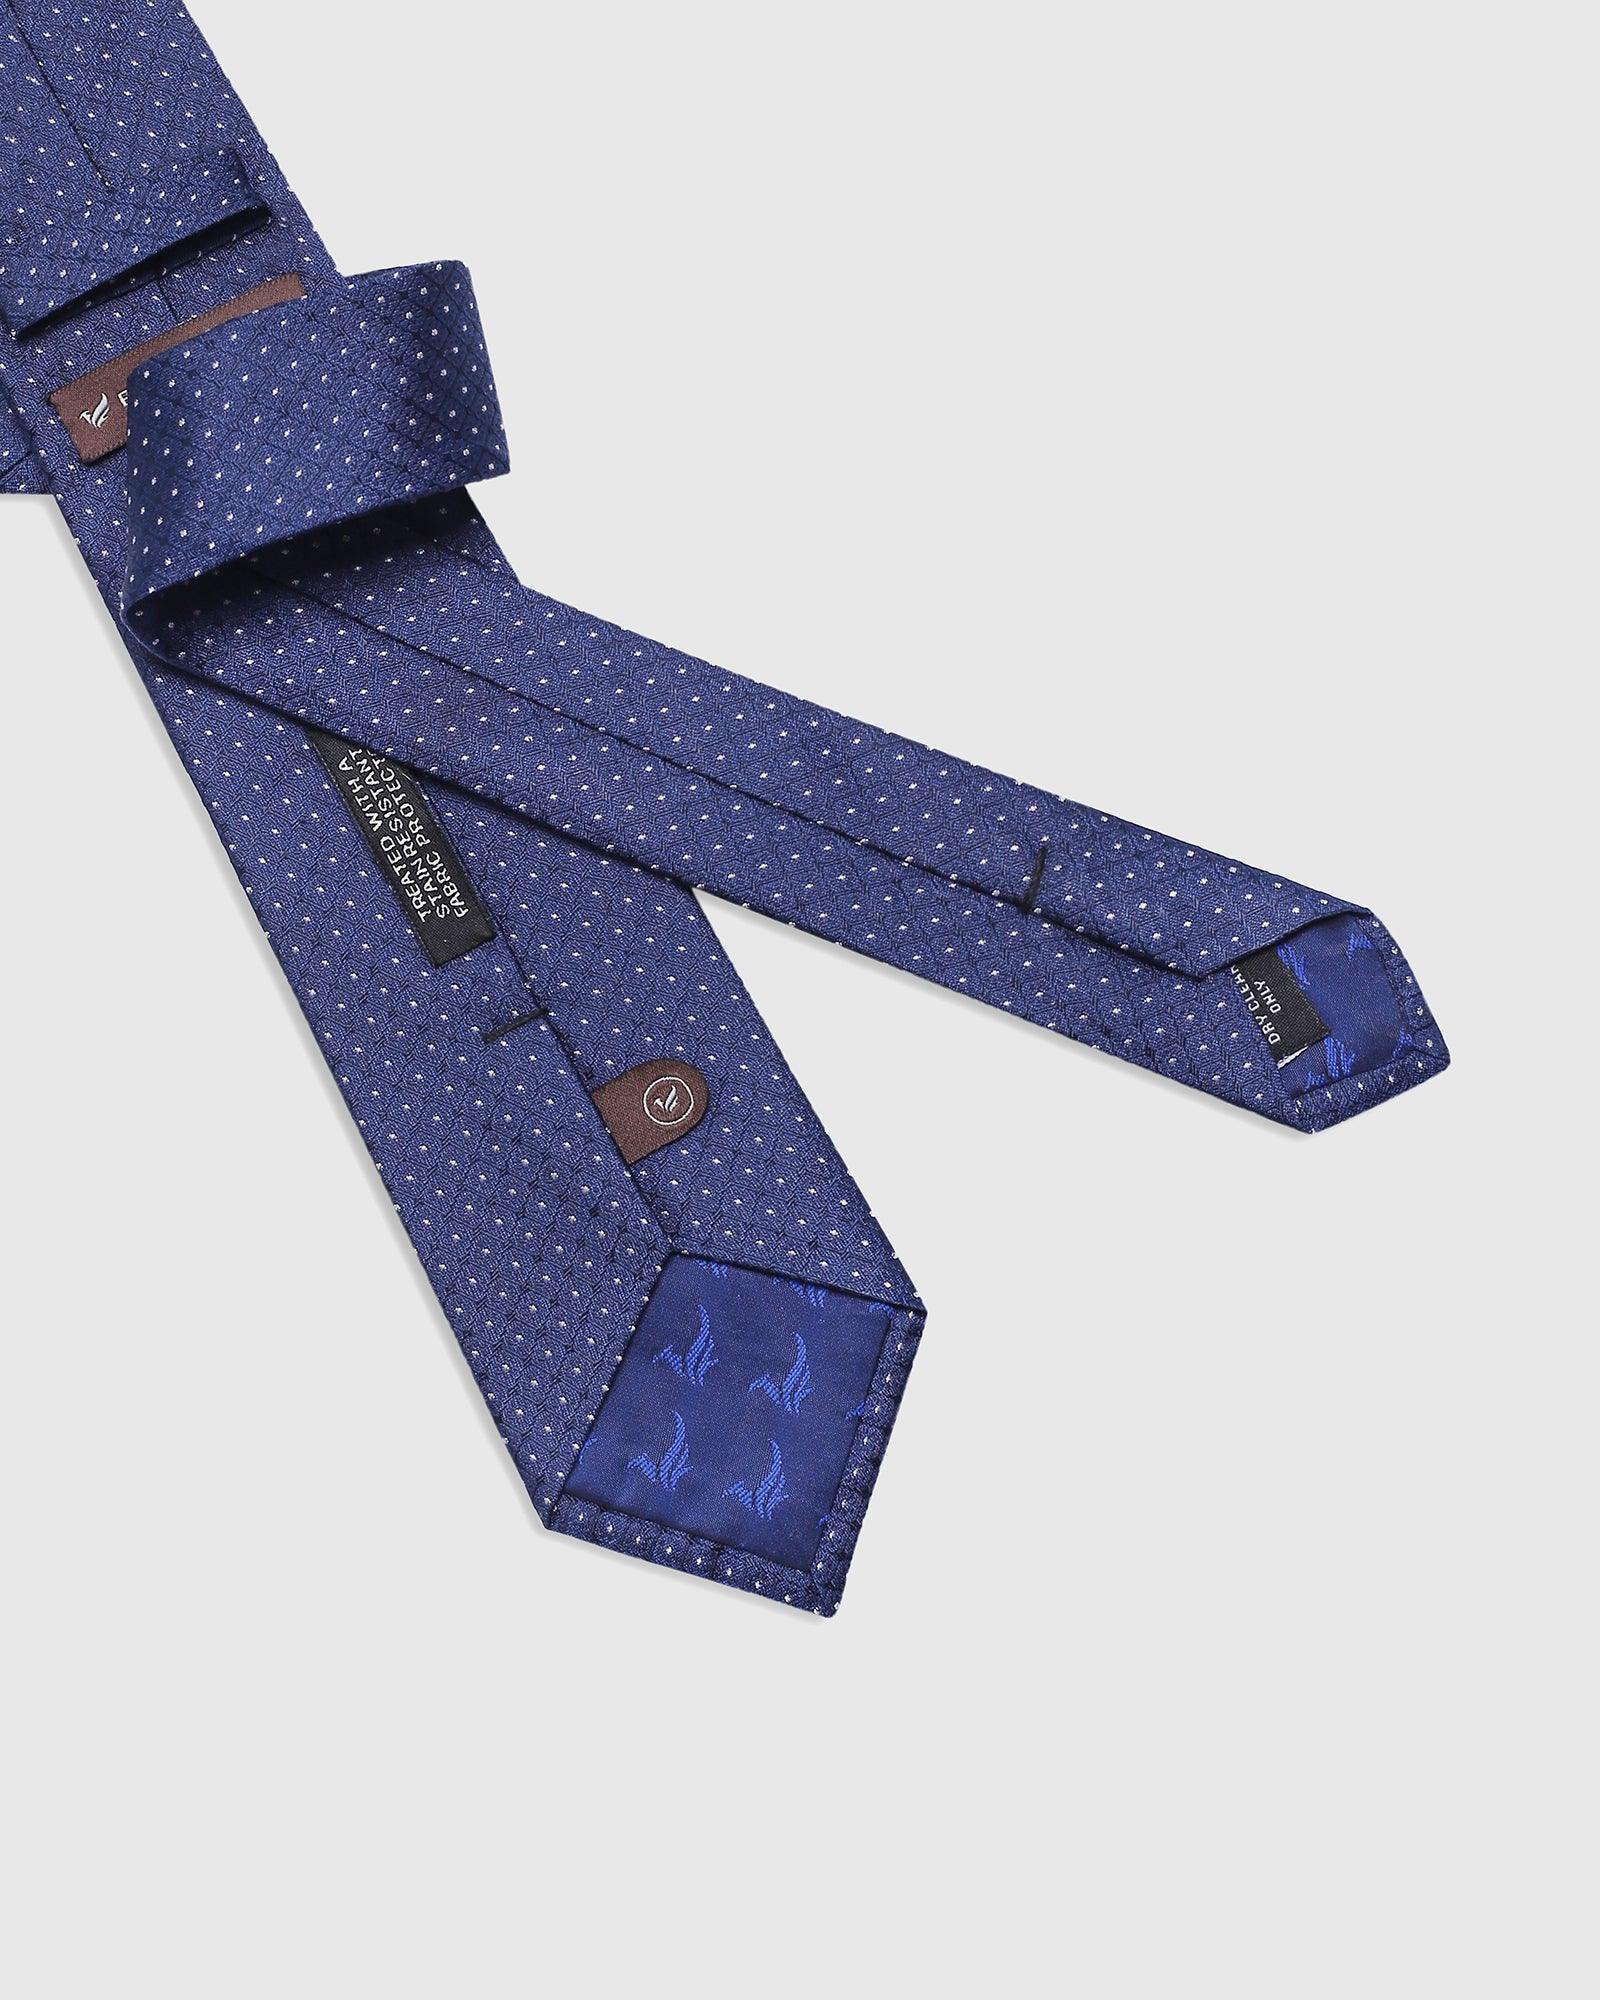 Silk Navy Printed Tie - Sidney